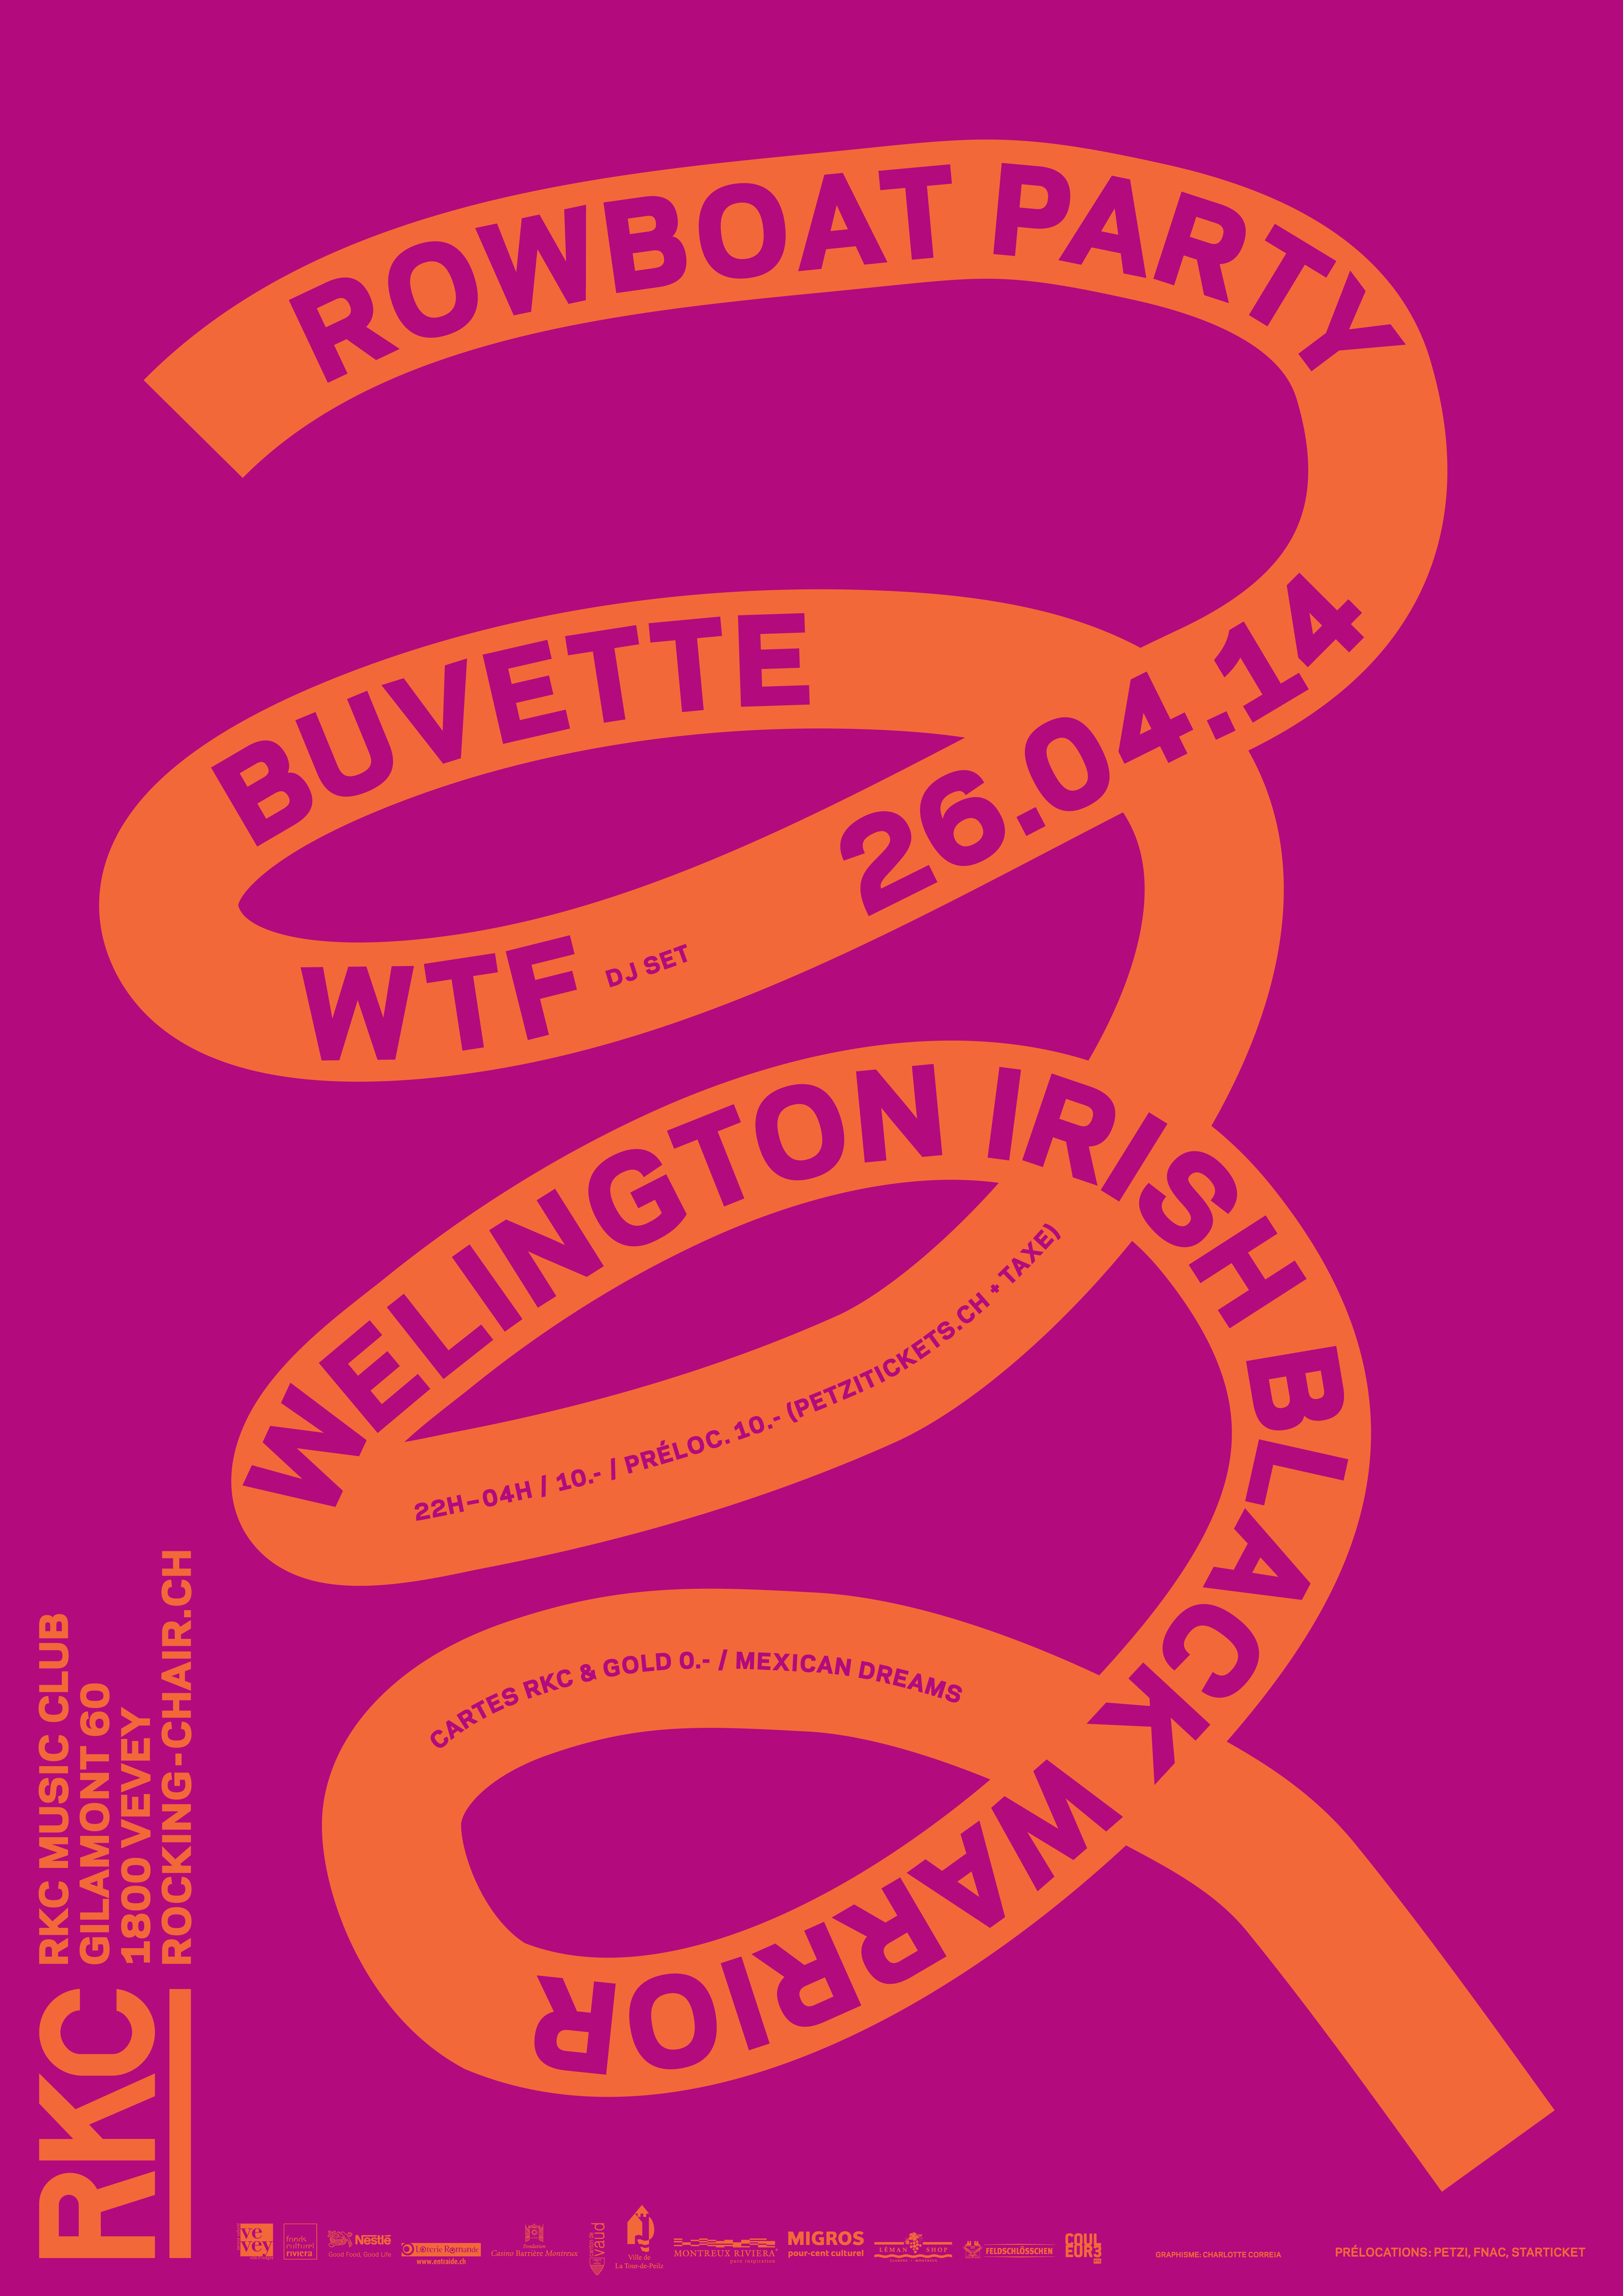 ROWBOAT PARTY : BUVETTE + WELINGTON IRISH BLACK WARRIOR + WTF (DJ set) - Rocking Chair Vevey